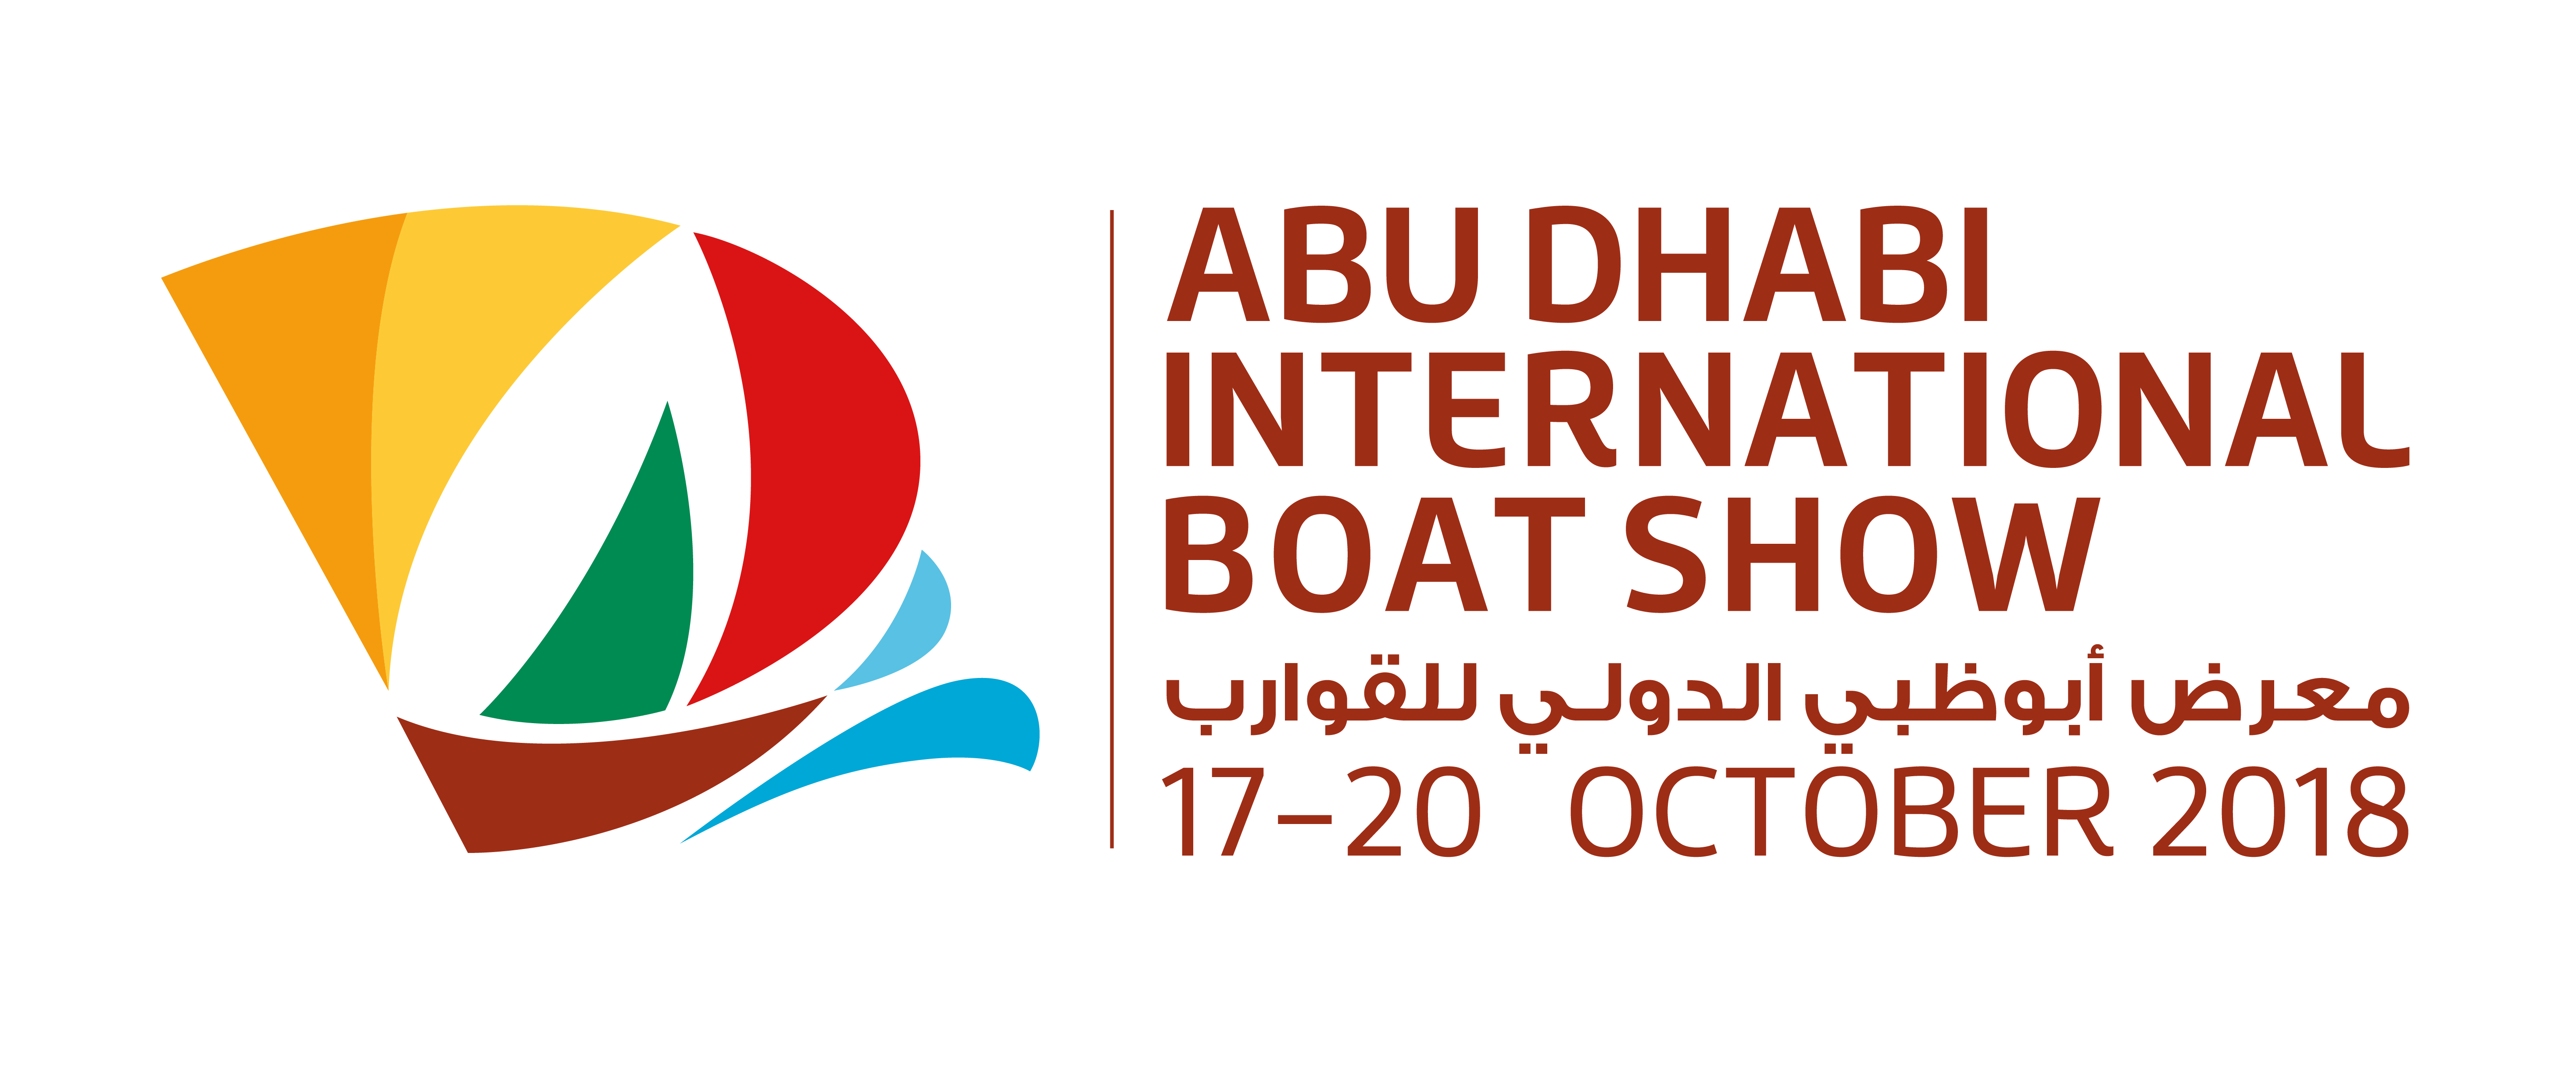 Abu dhabi international boat show